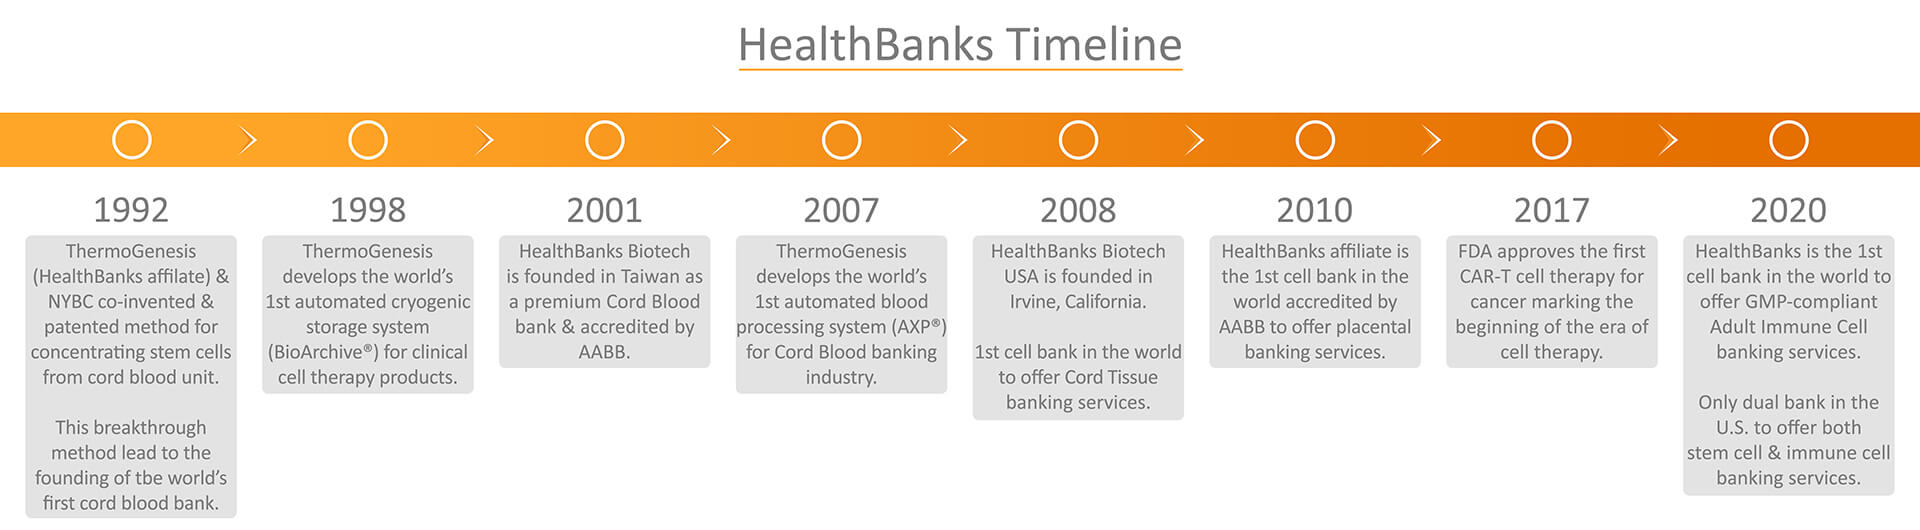 HealthBanks Company History Timeline-2